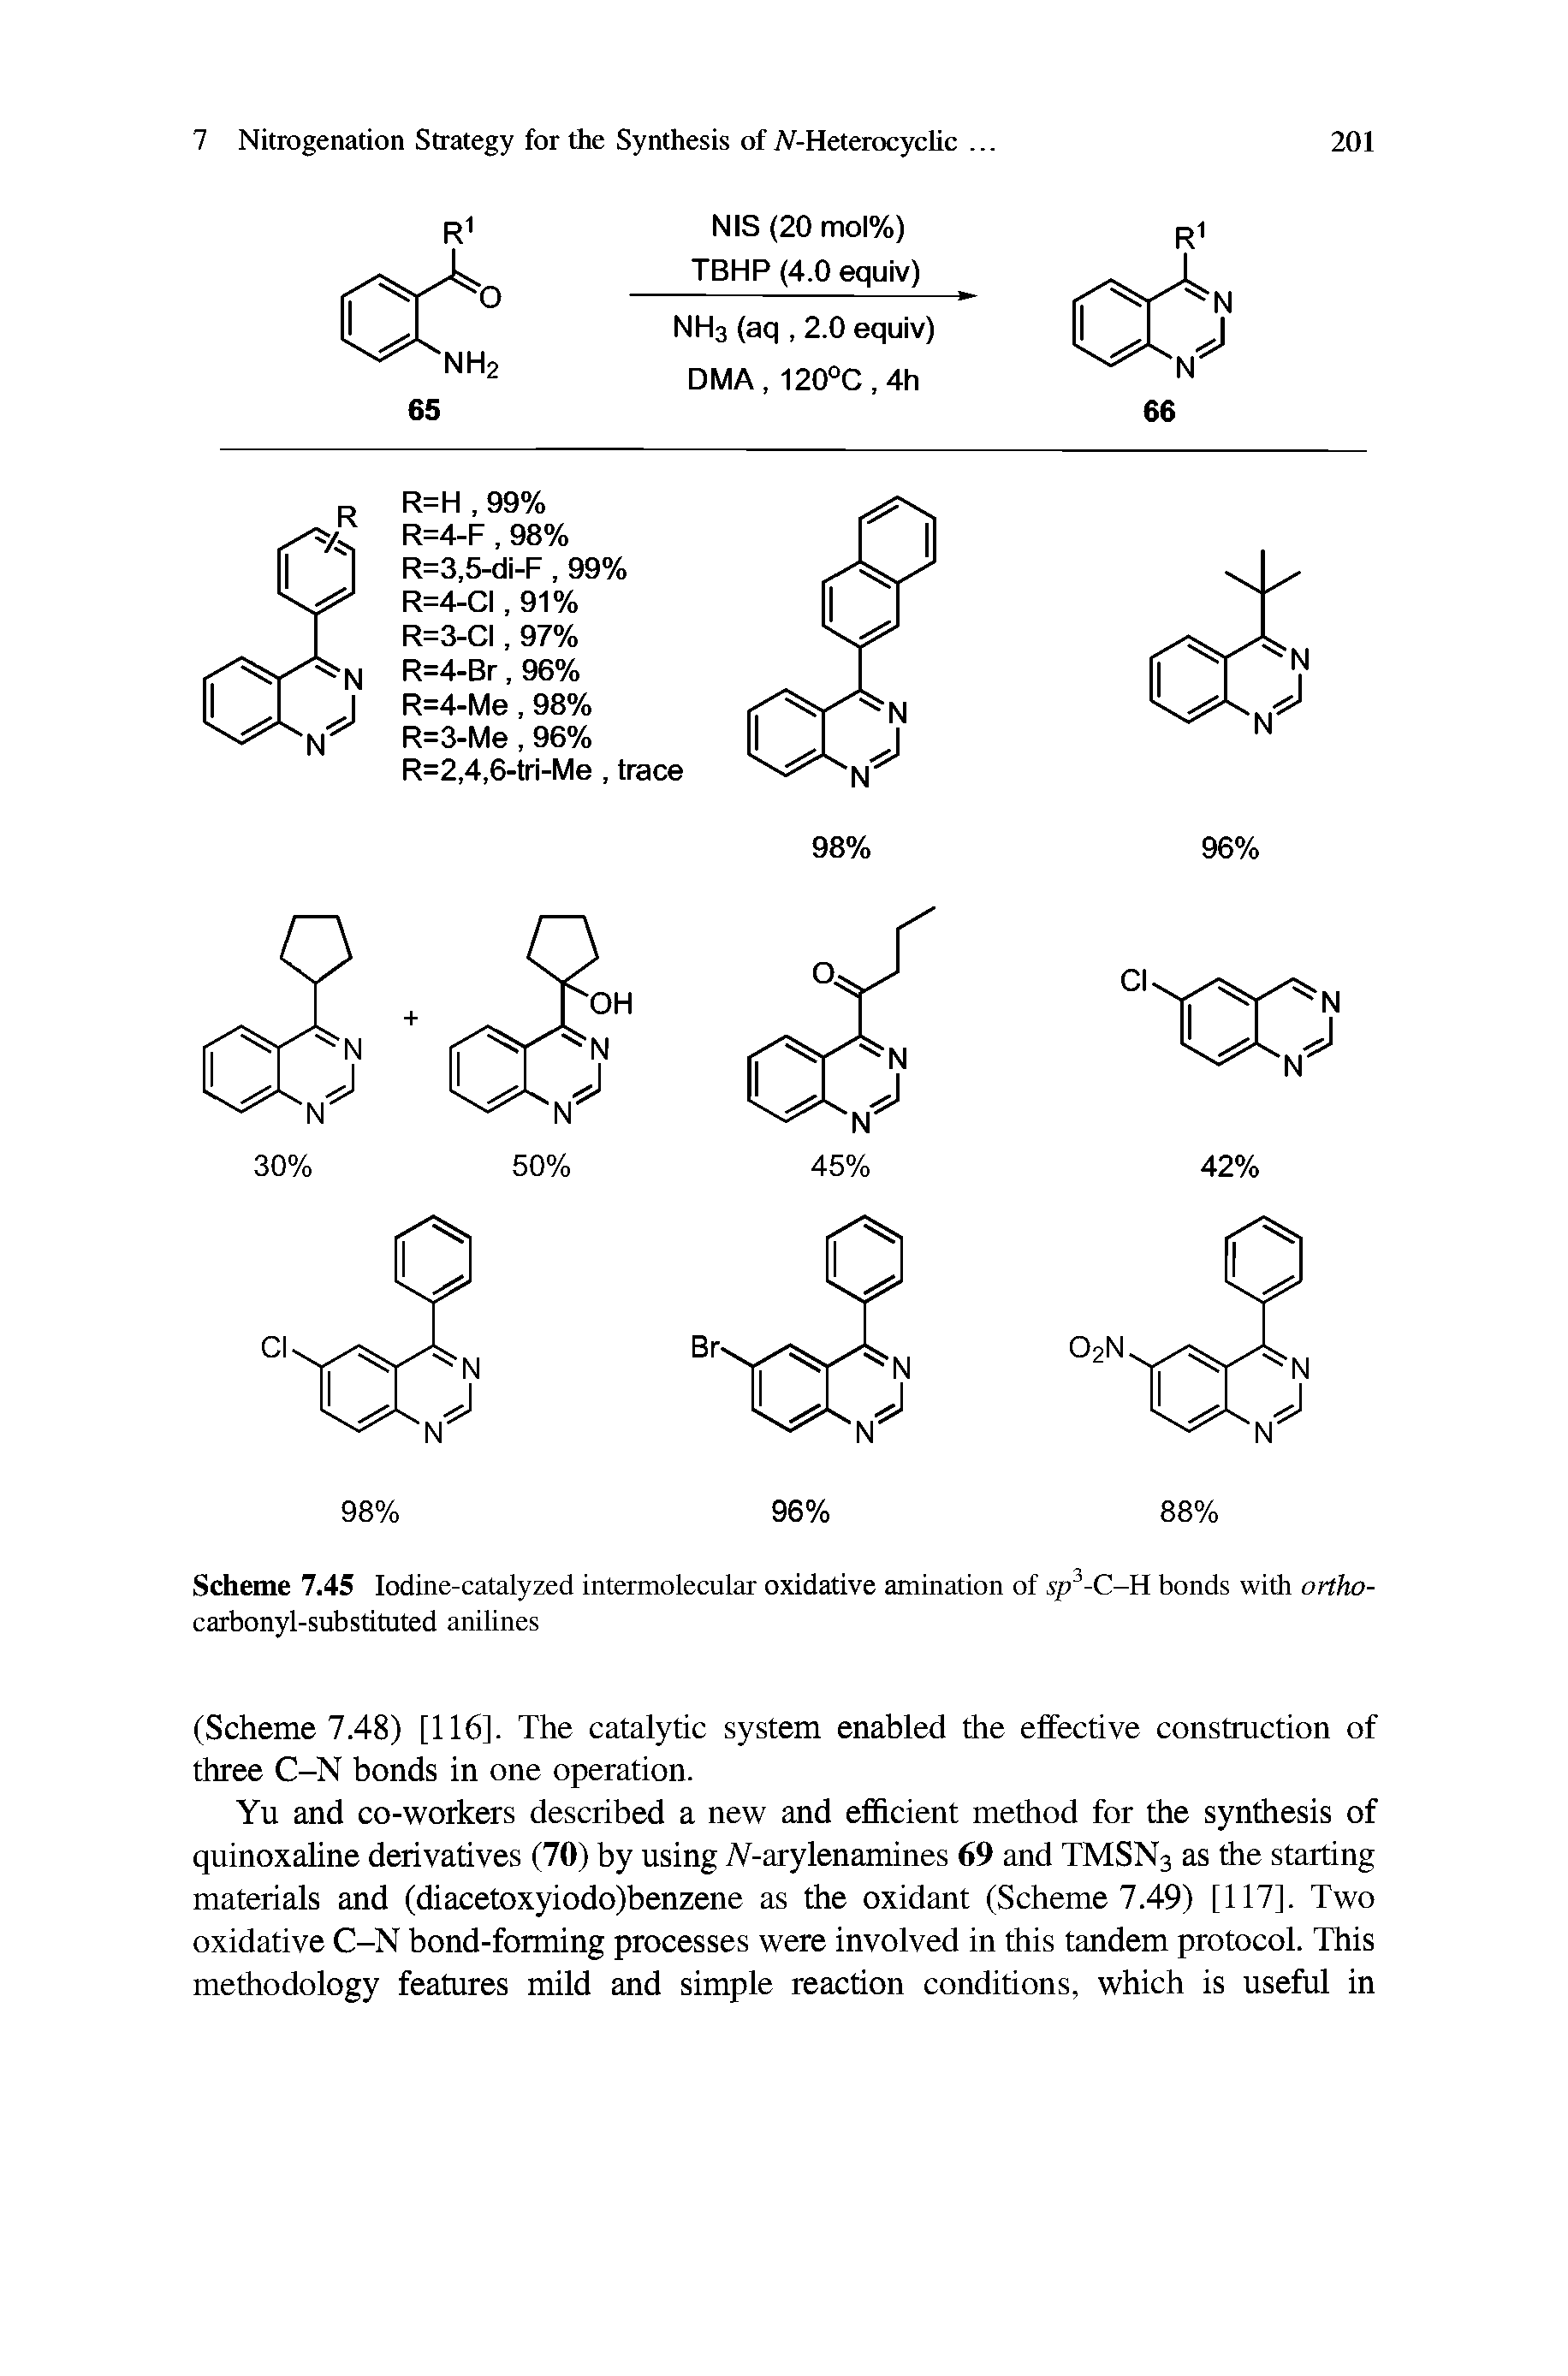 Scheme 7.45 Iodine-catalyzed intermolecular oxidative amination of sp -C-H bonds with ortho-carbonyl-substituted anilines...